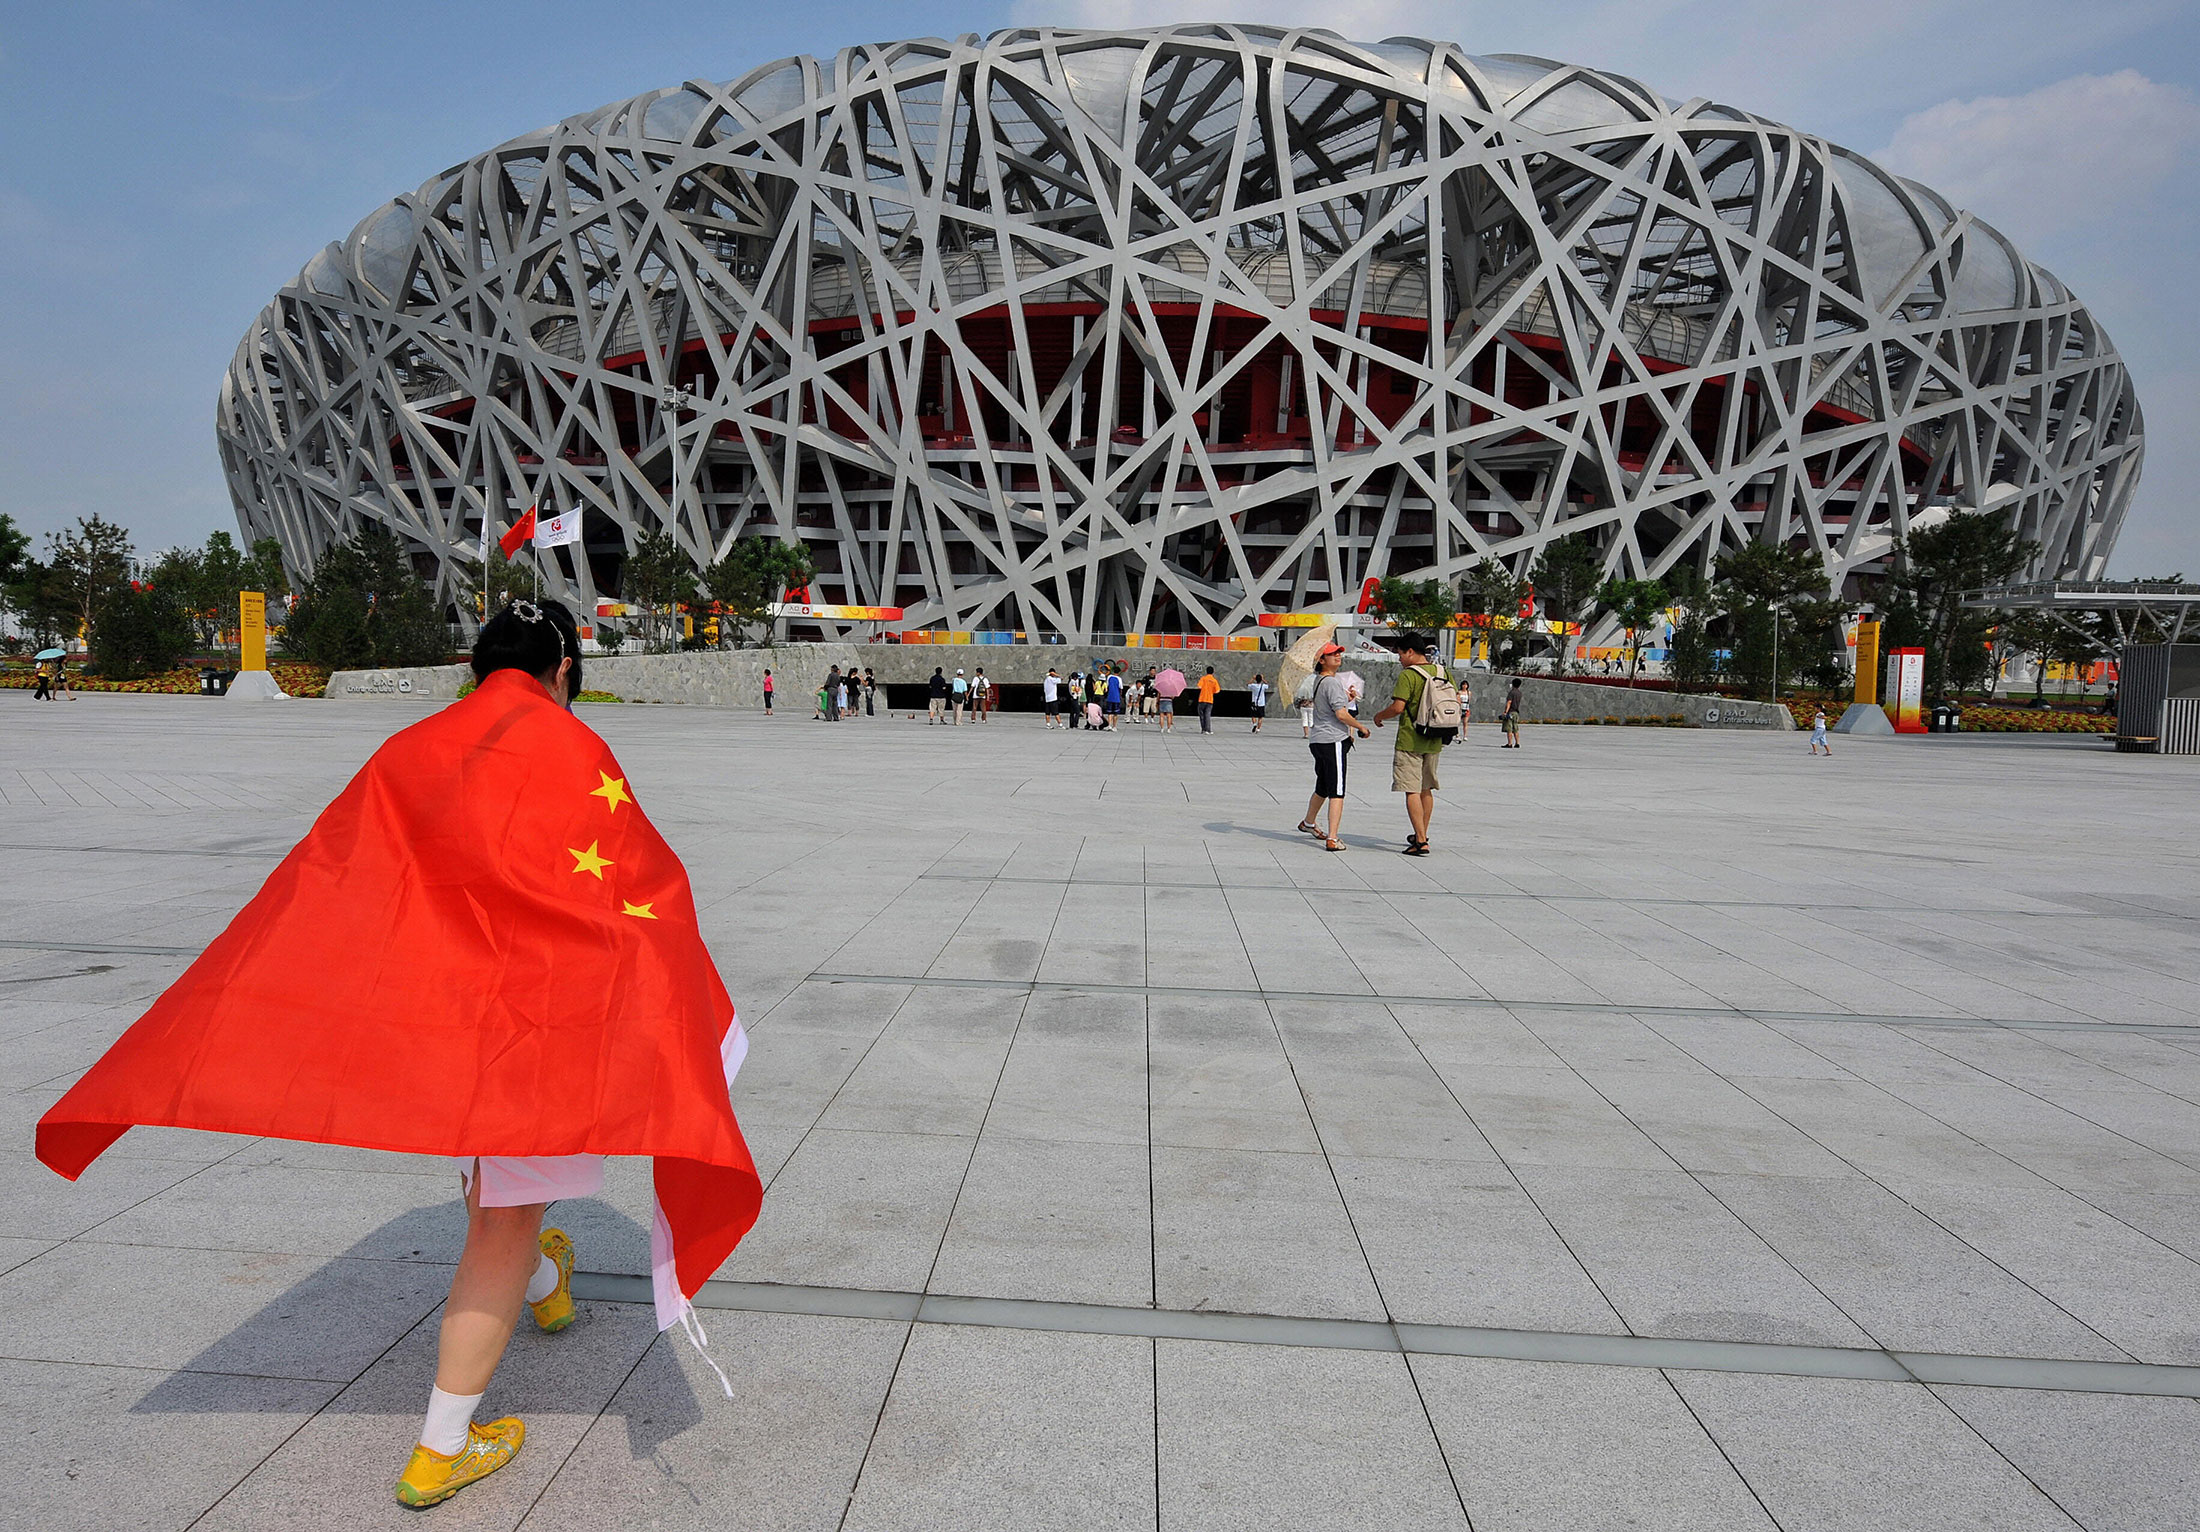 Beijing's Rising Pollution Risks Smoggy 2022 Winter Olympics - Bloomberg